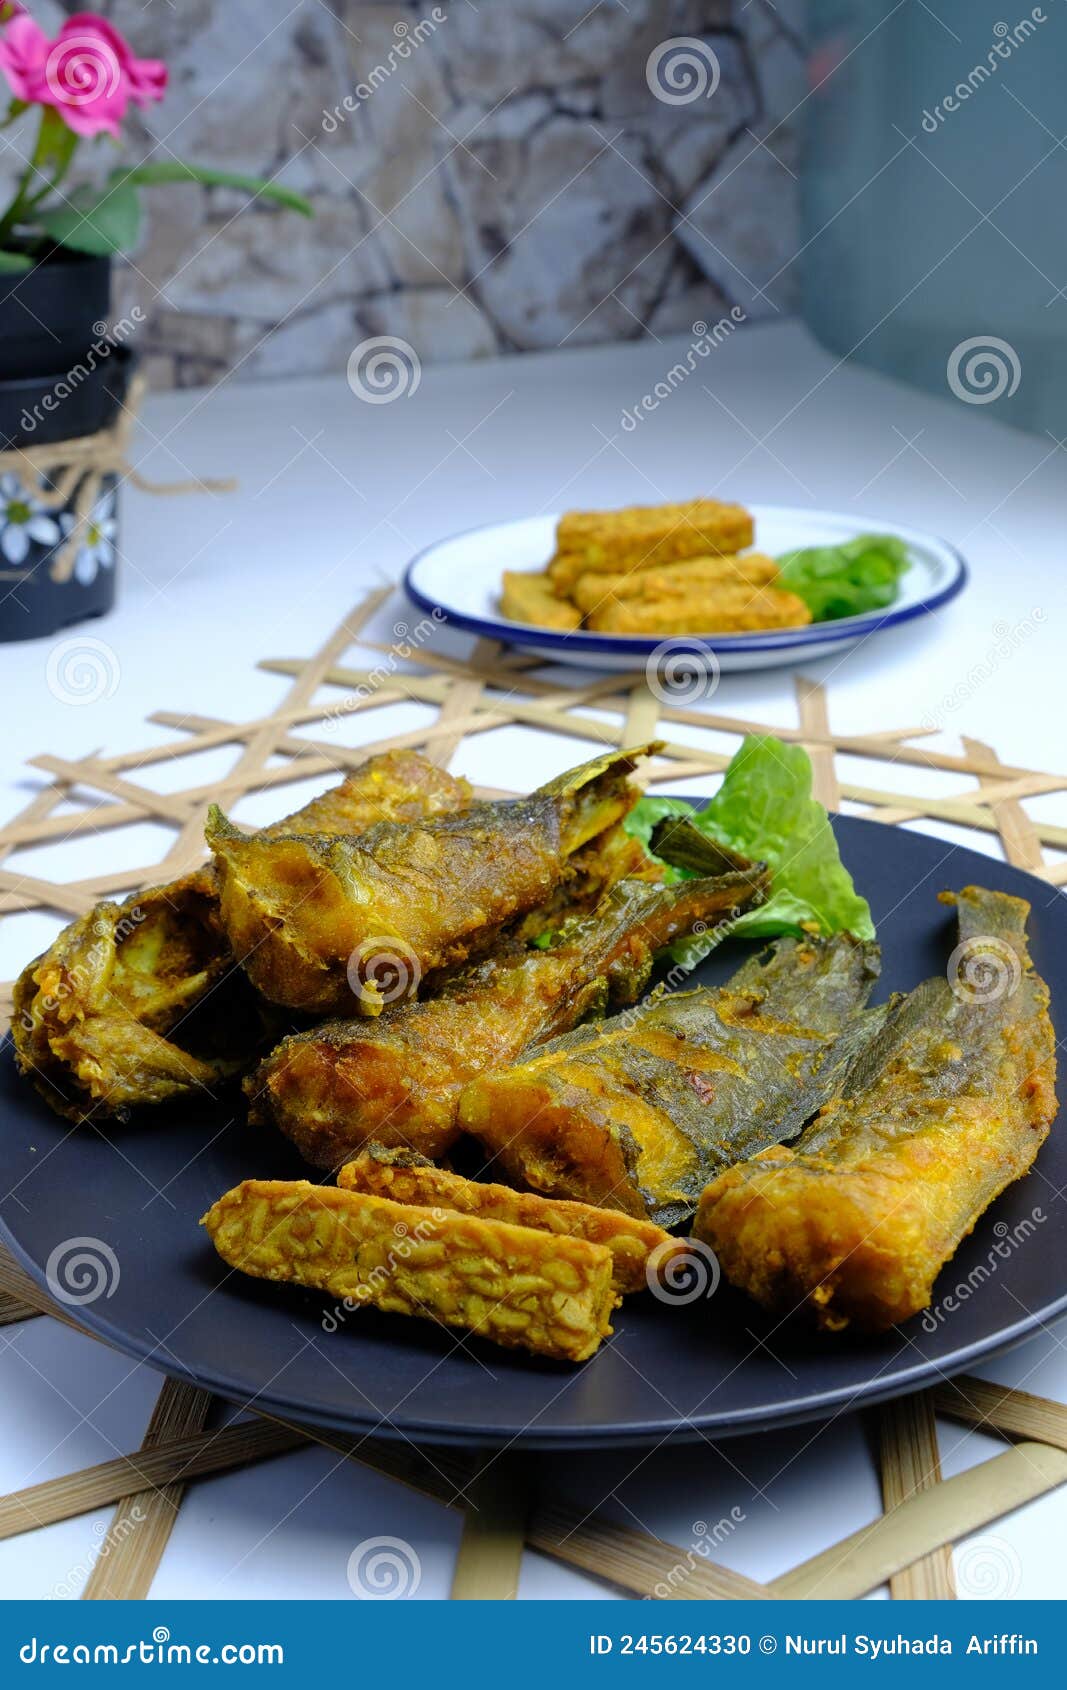 Ikan Keli or Fried Catfish on Black Plate Stock Photo - Image of breakfast,  lunch: 245624330